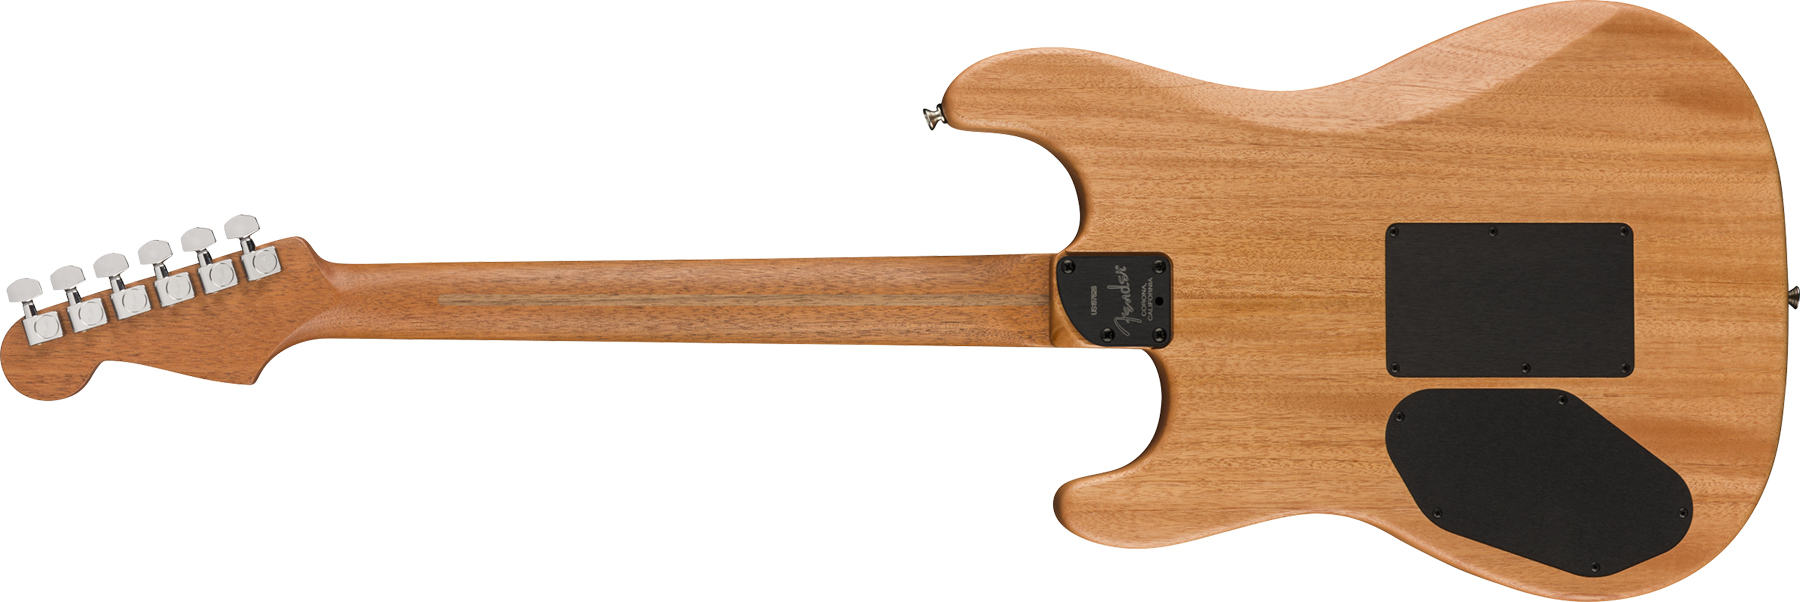 Fender Strat American Acoustasonic Usa Eb - Black - Elektroakustische Gitarre - Variation 1